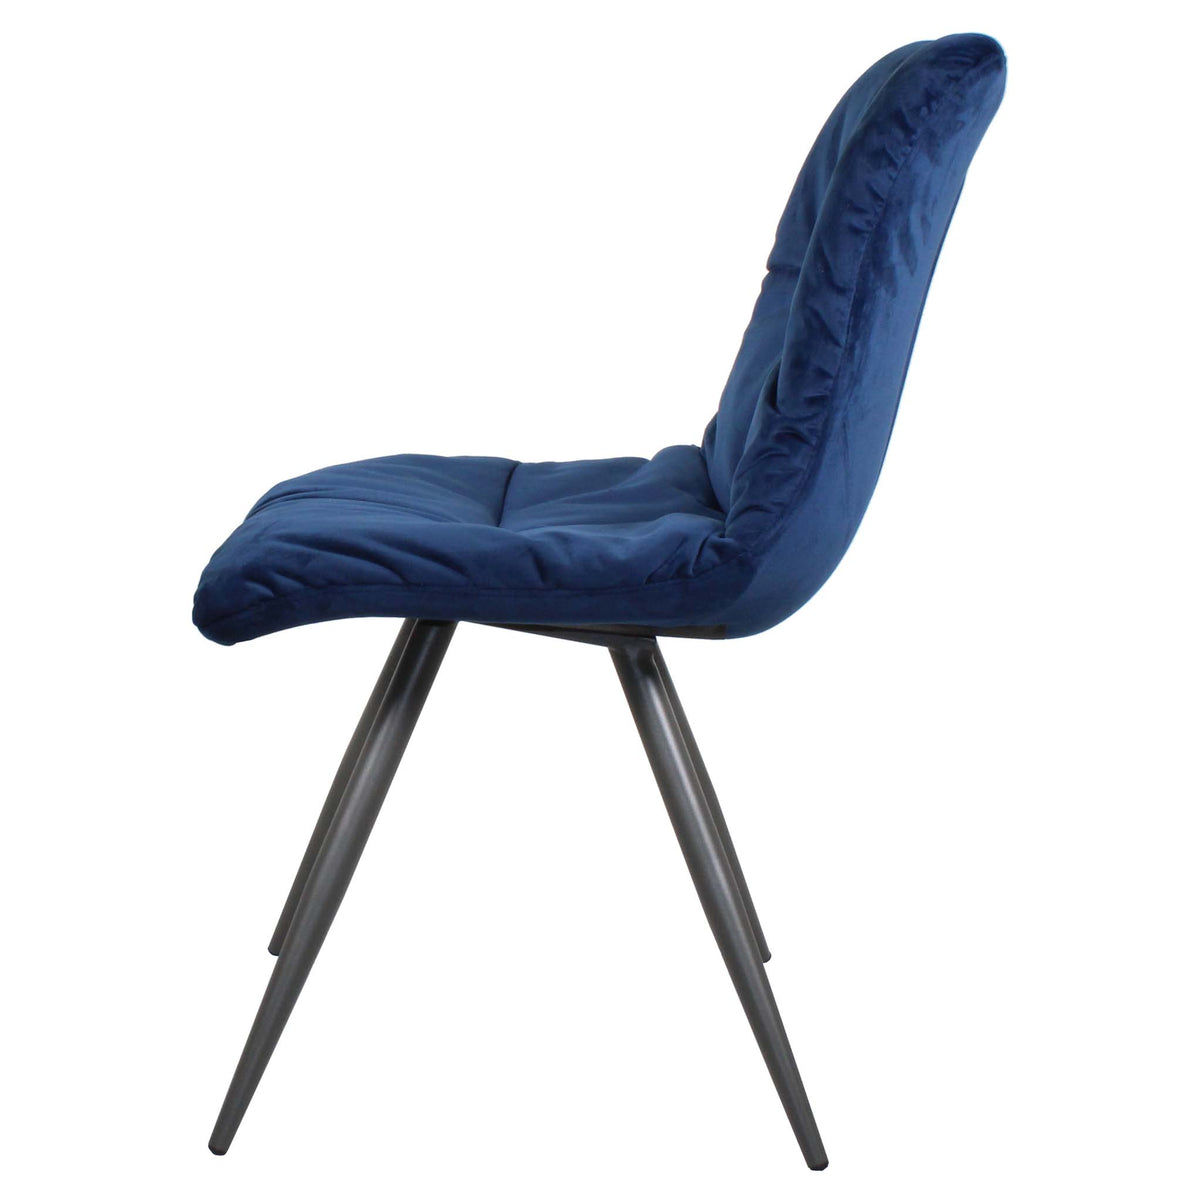 Side view of Blue Addison Velvet Chair from Roseland Furniture